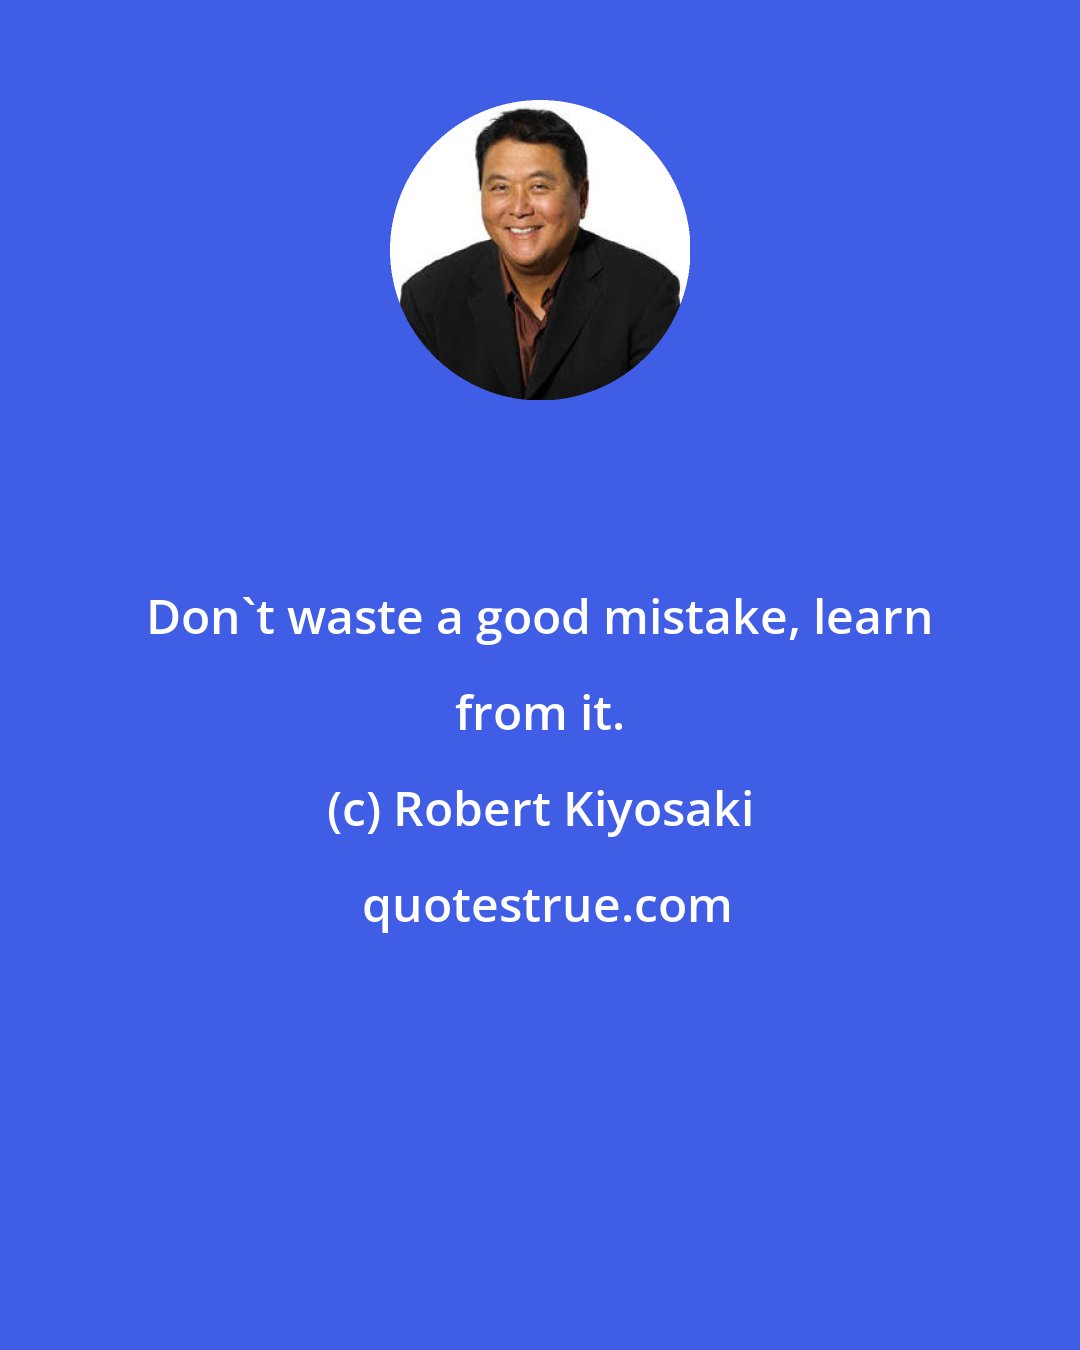 Robert Kiyosaki: Don't waste a good mistake, learn from it.